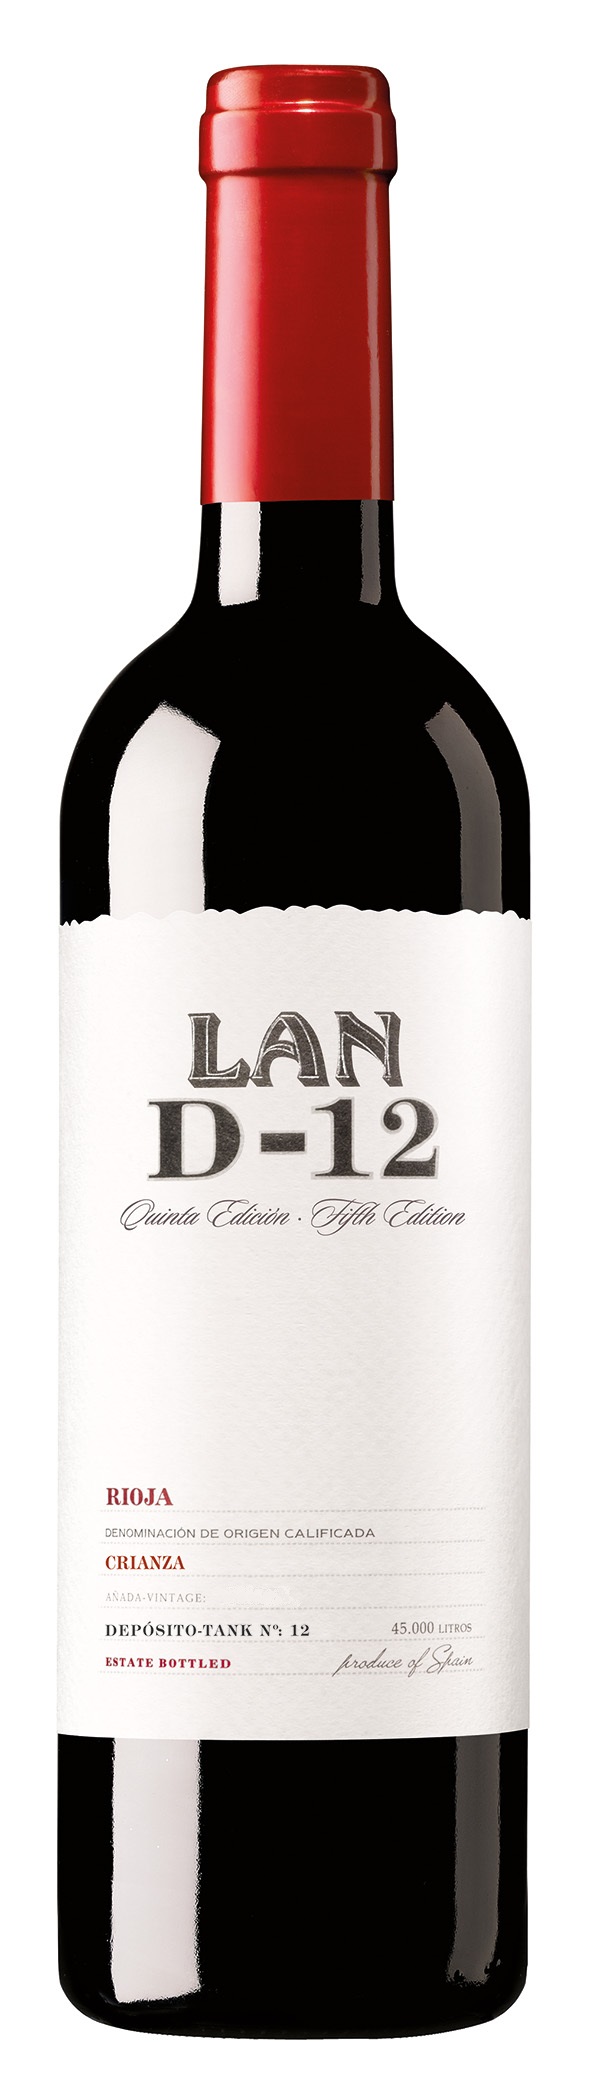 Logo del vino Lan D-12